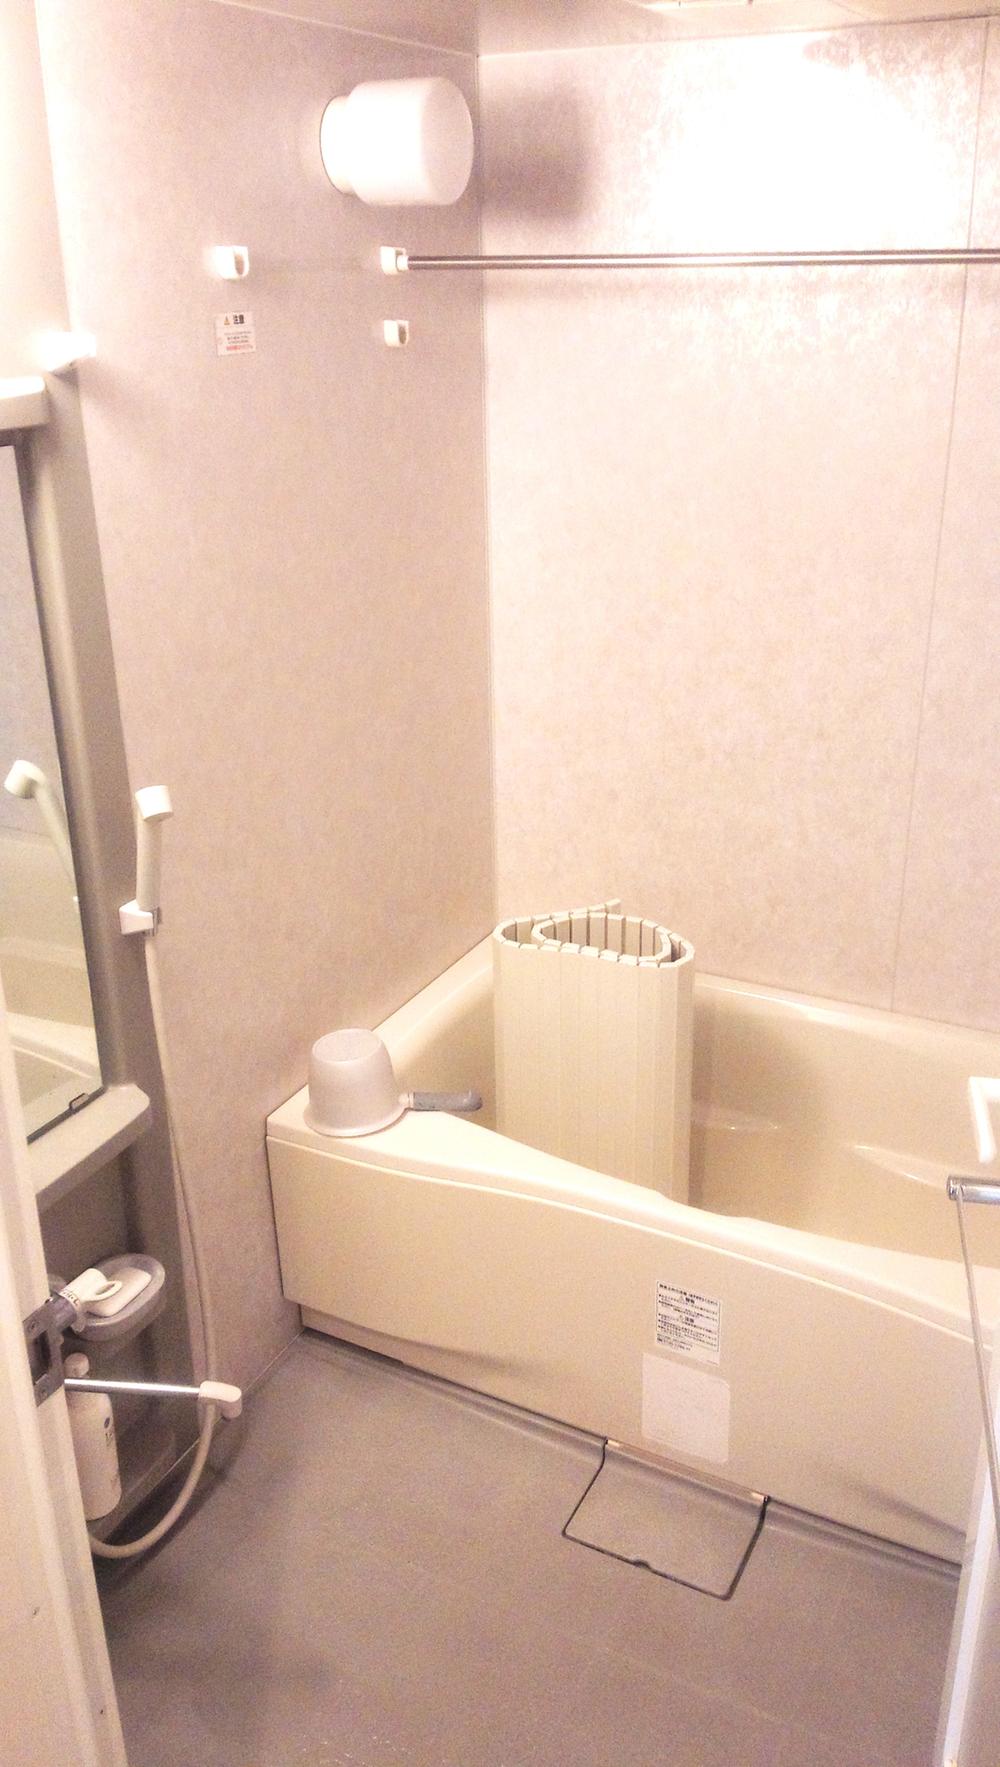 Bathroom. Unit bus (September 2013) Shooting